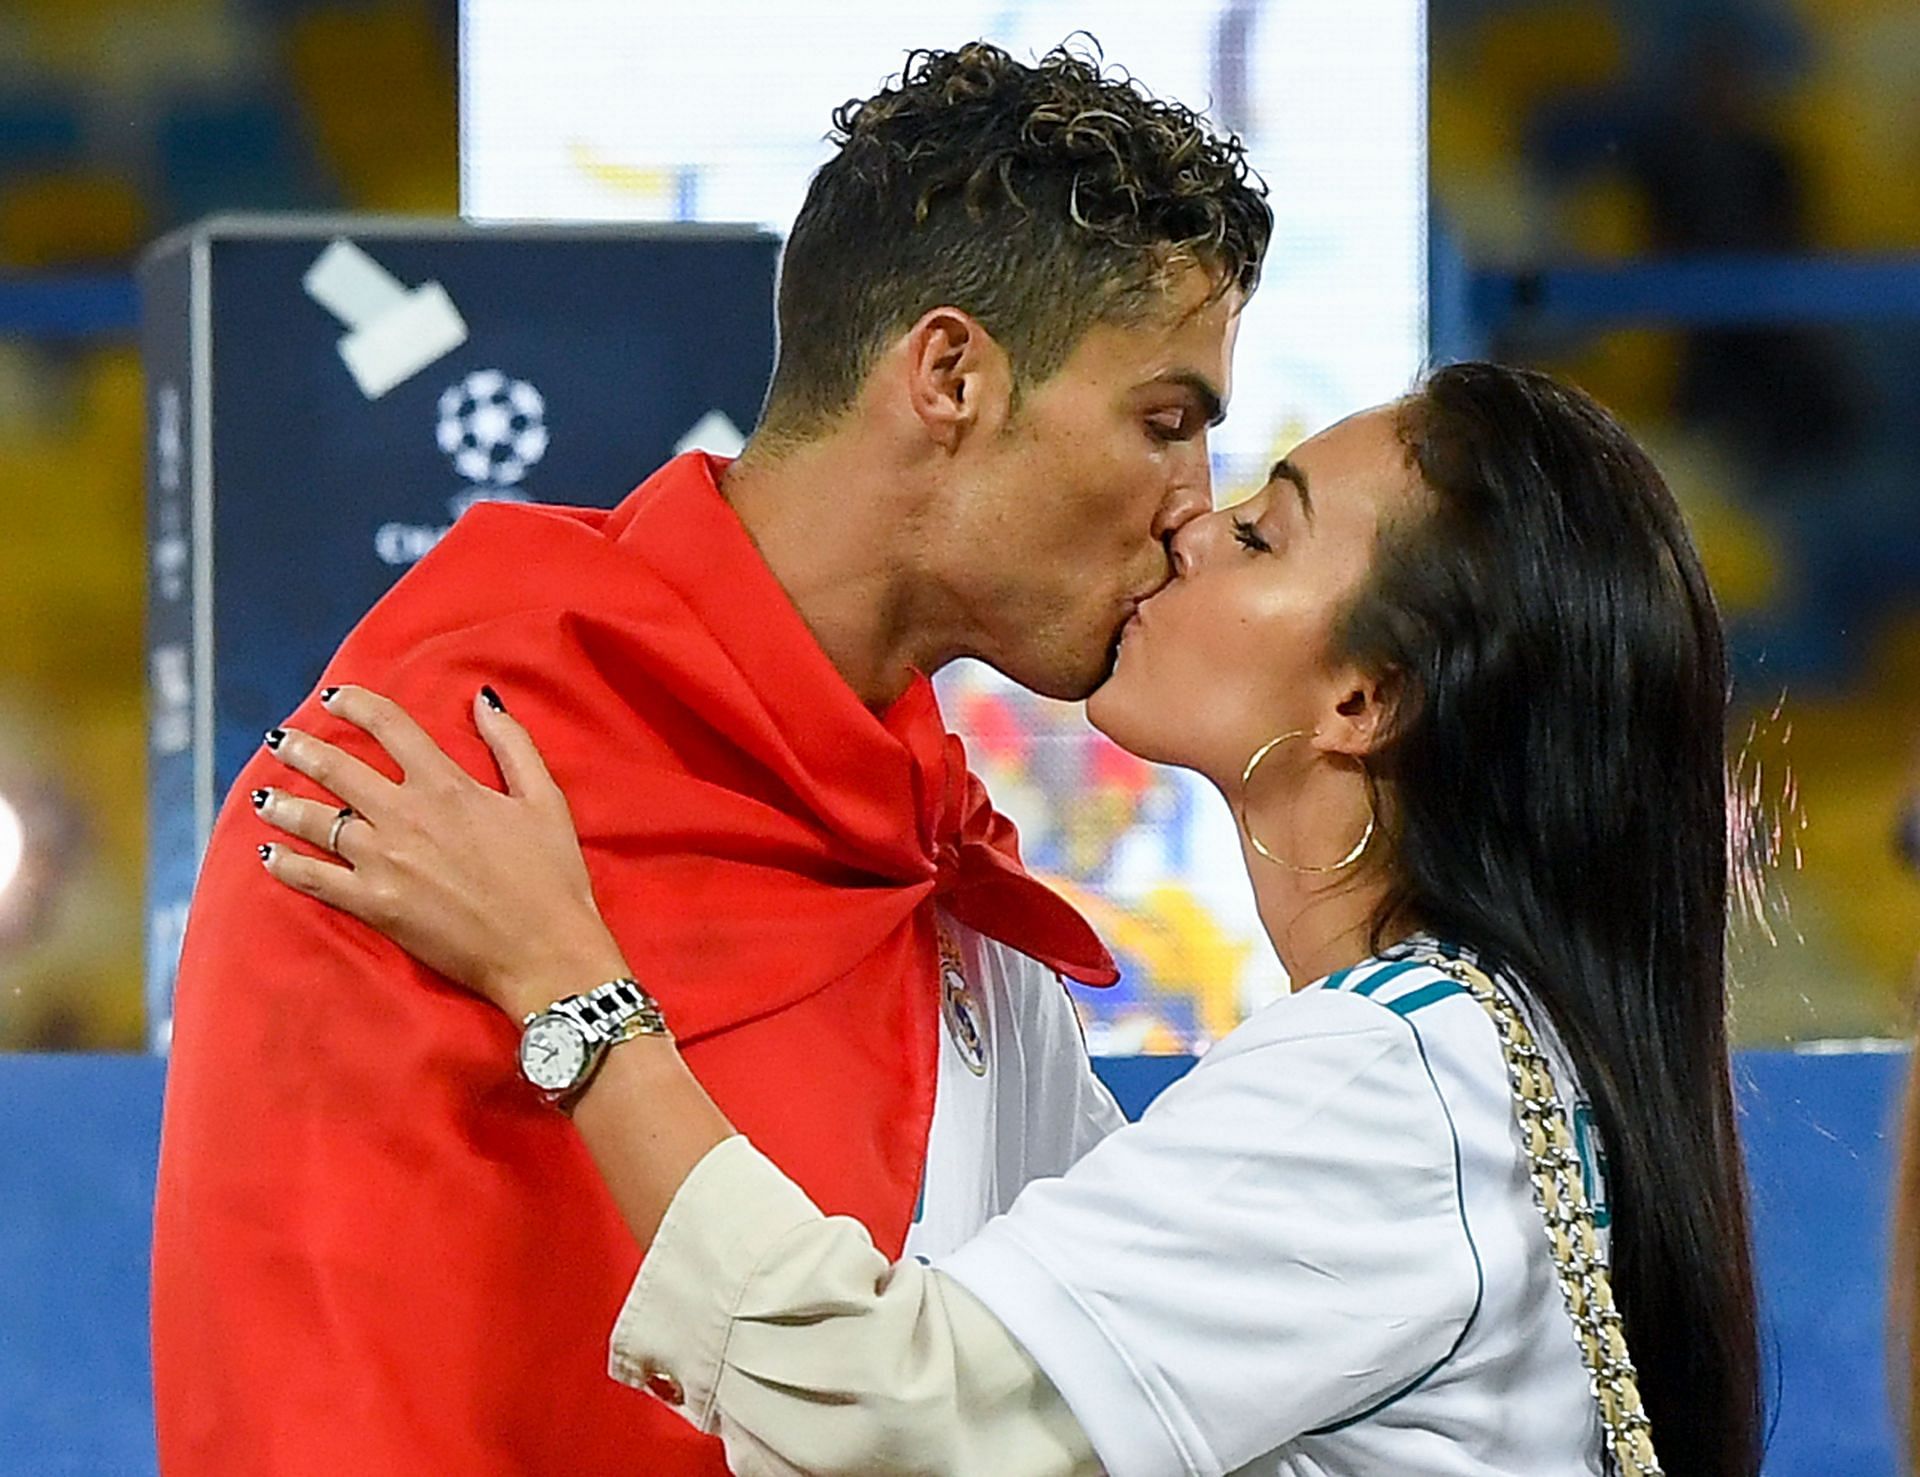 Cristiano Ronaldo gave Georgina Rodriguez butterflies when they first met.